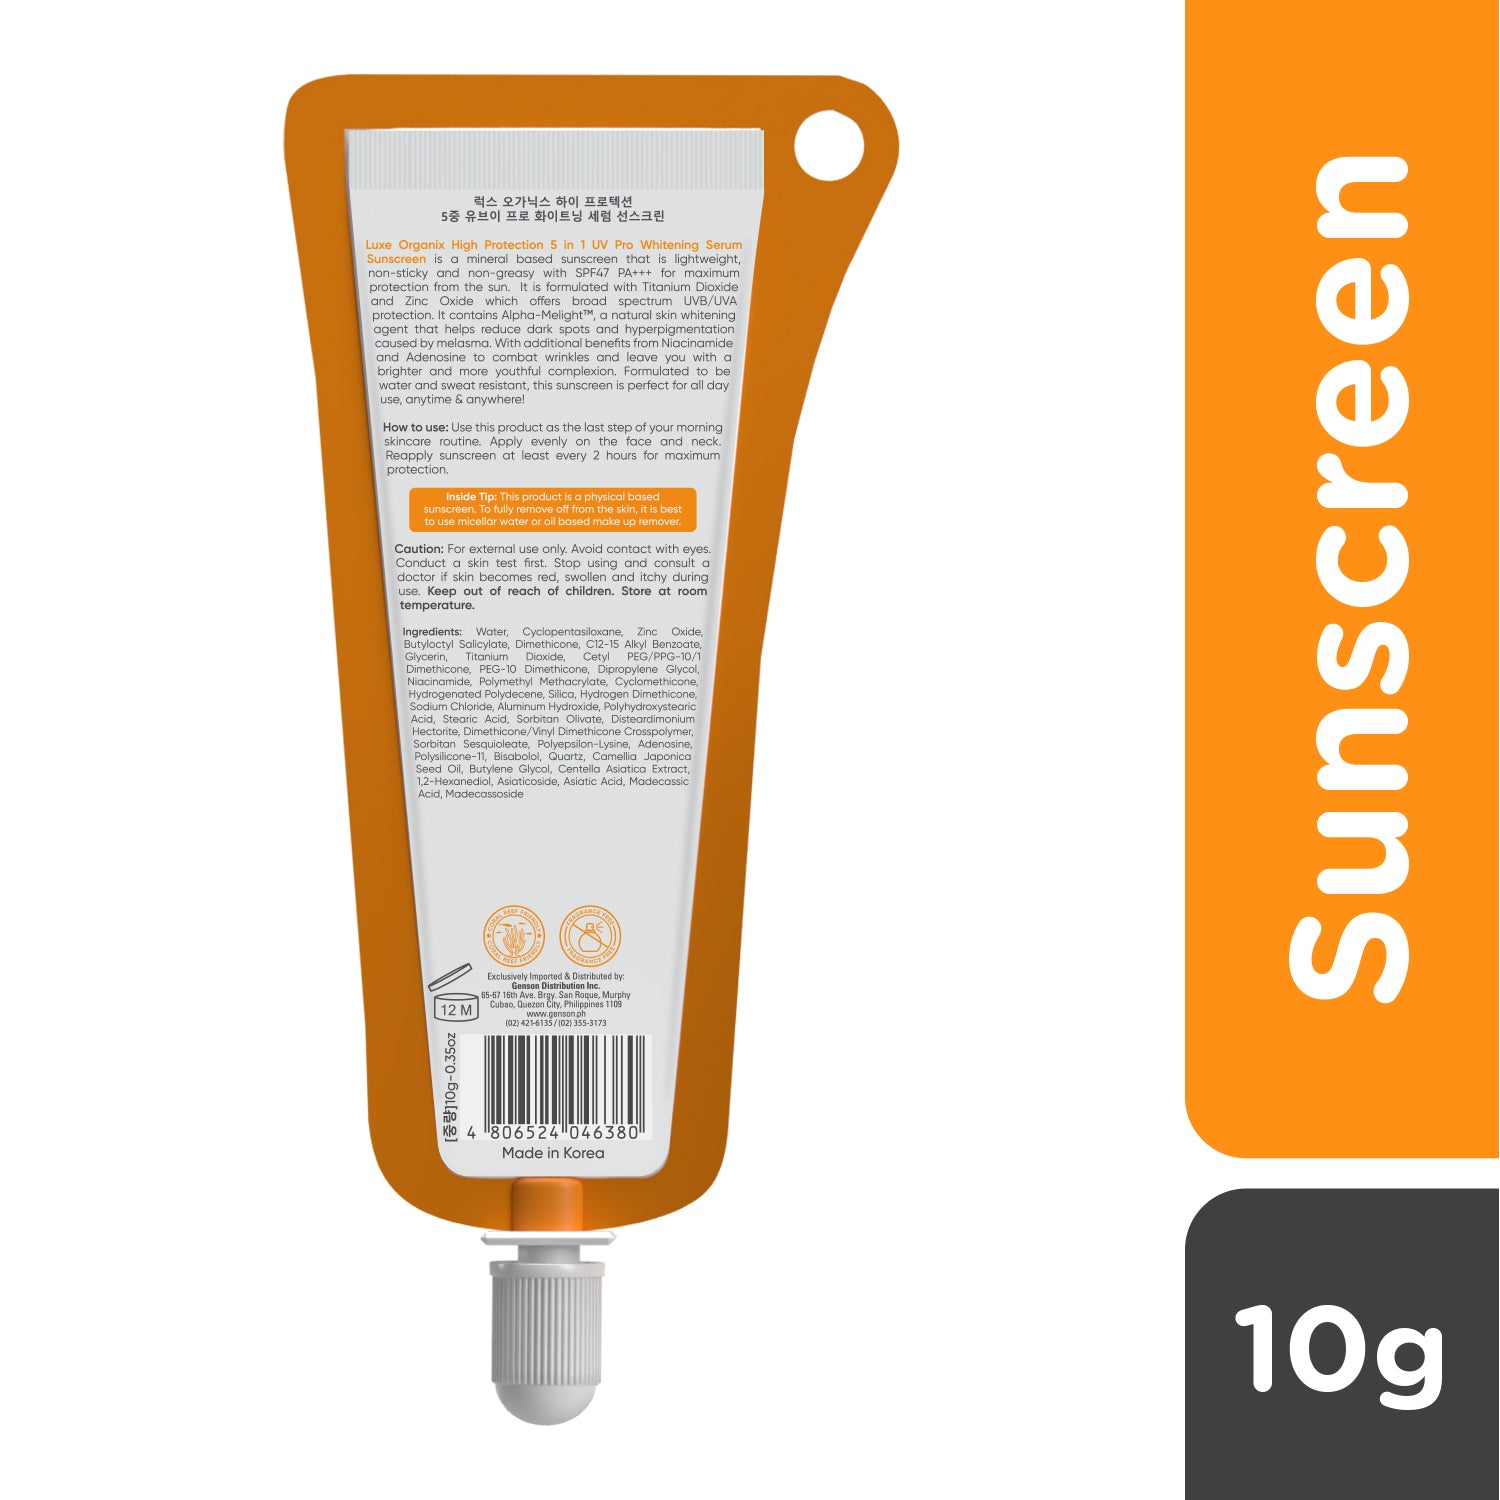 High Protection 5in1 UV Pro Whitening Serum Sunscreen SPF 47 PA+ 10g